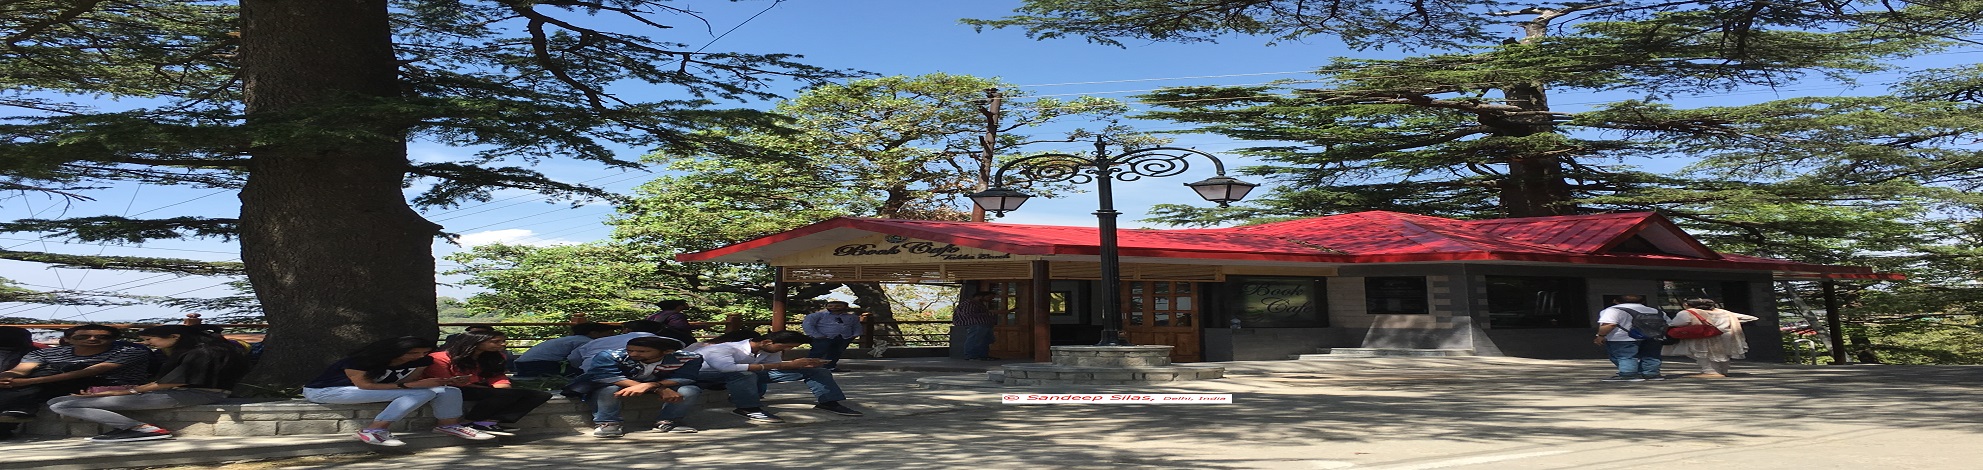 Book Cafe Shimla